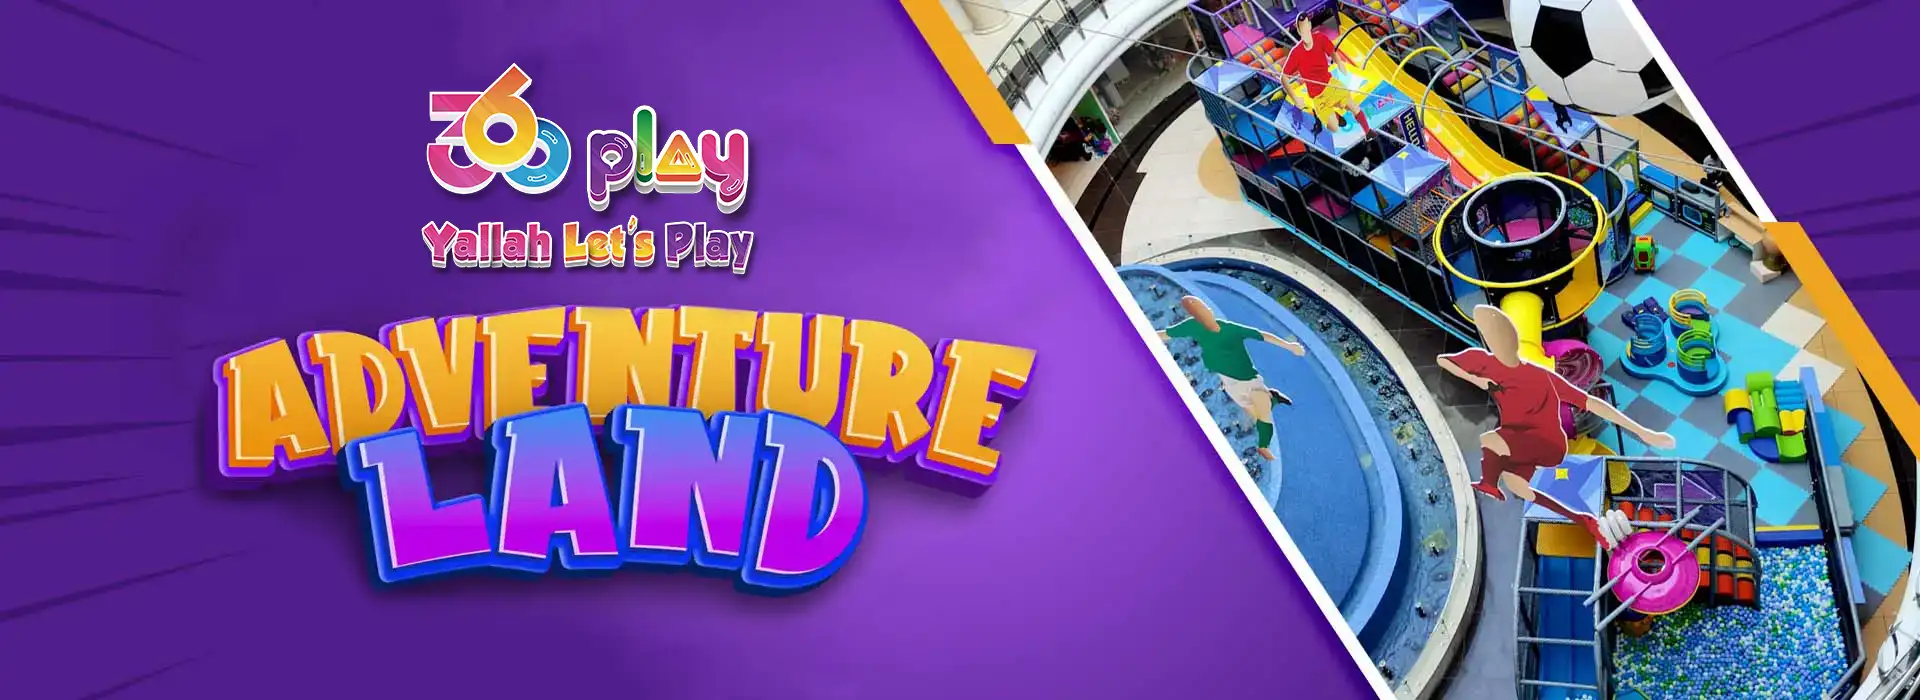 Adventure Land Tawar Mall